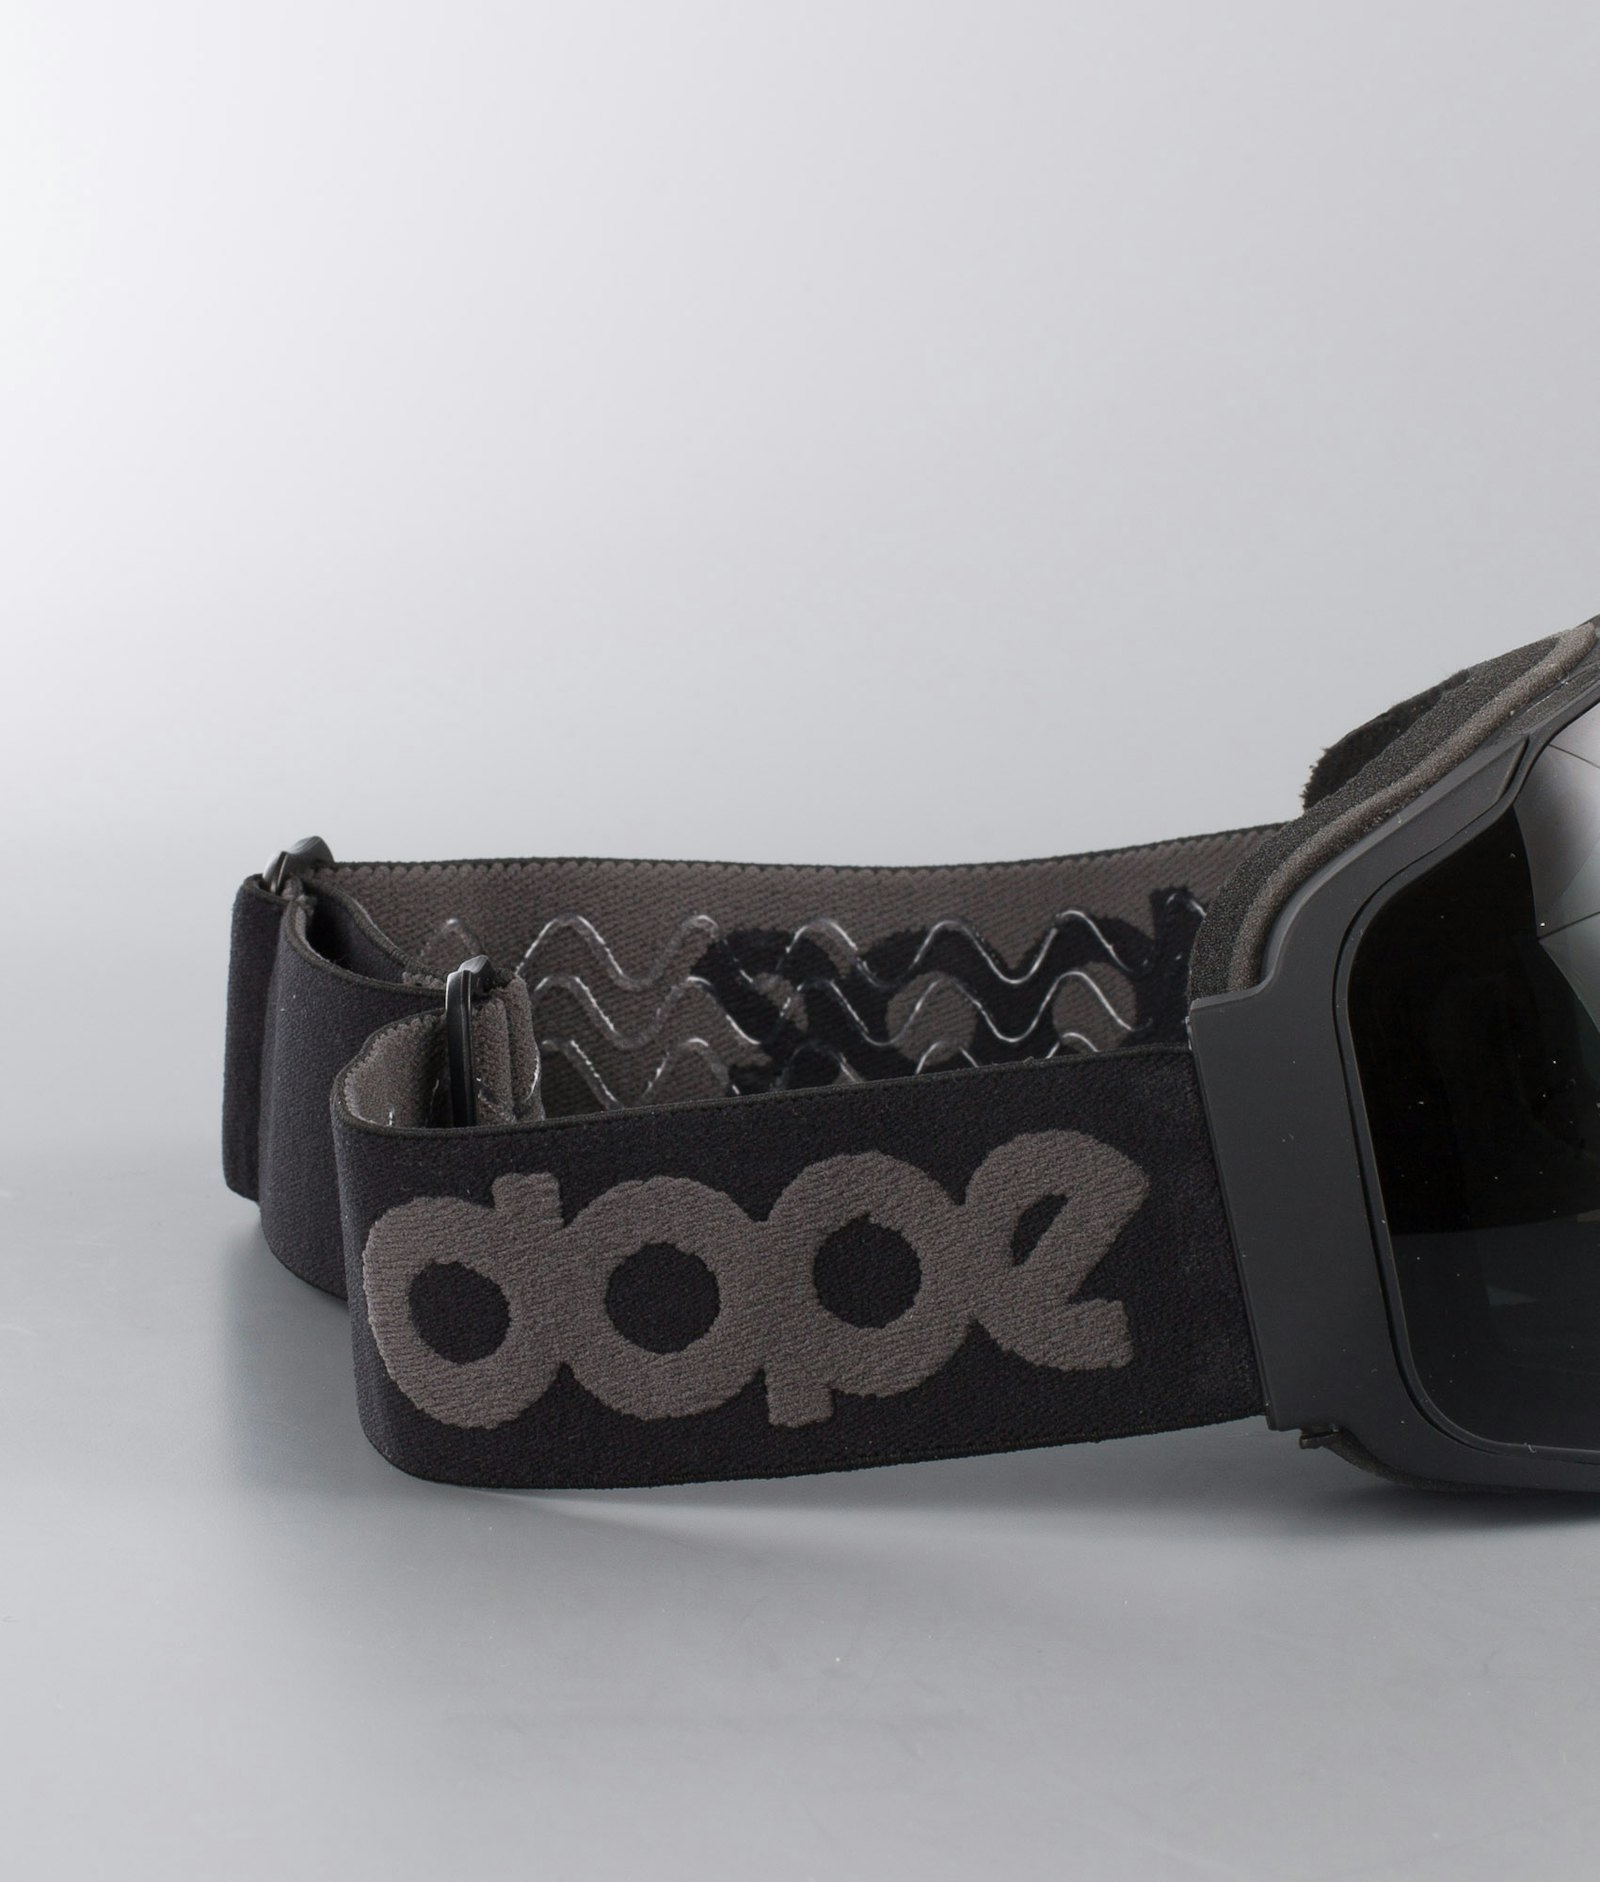 Dope OG Logo Accesorios gafas Black Dark Grey